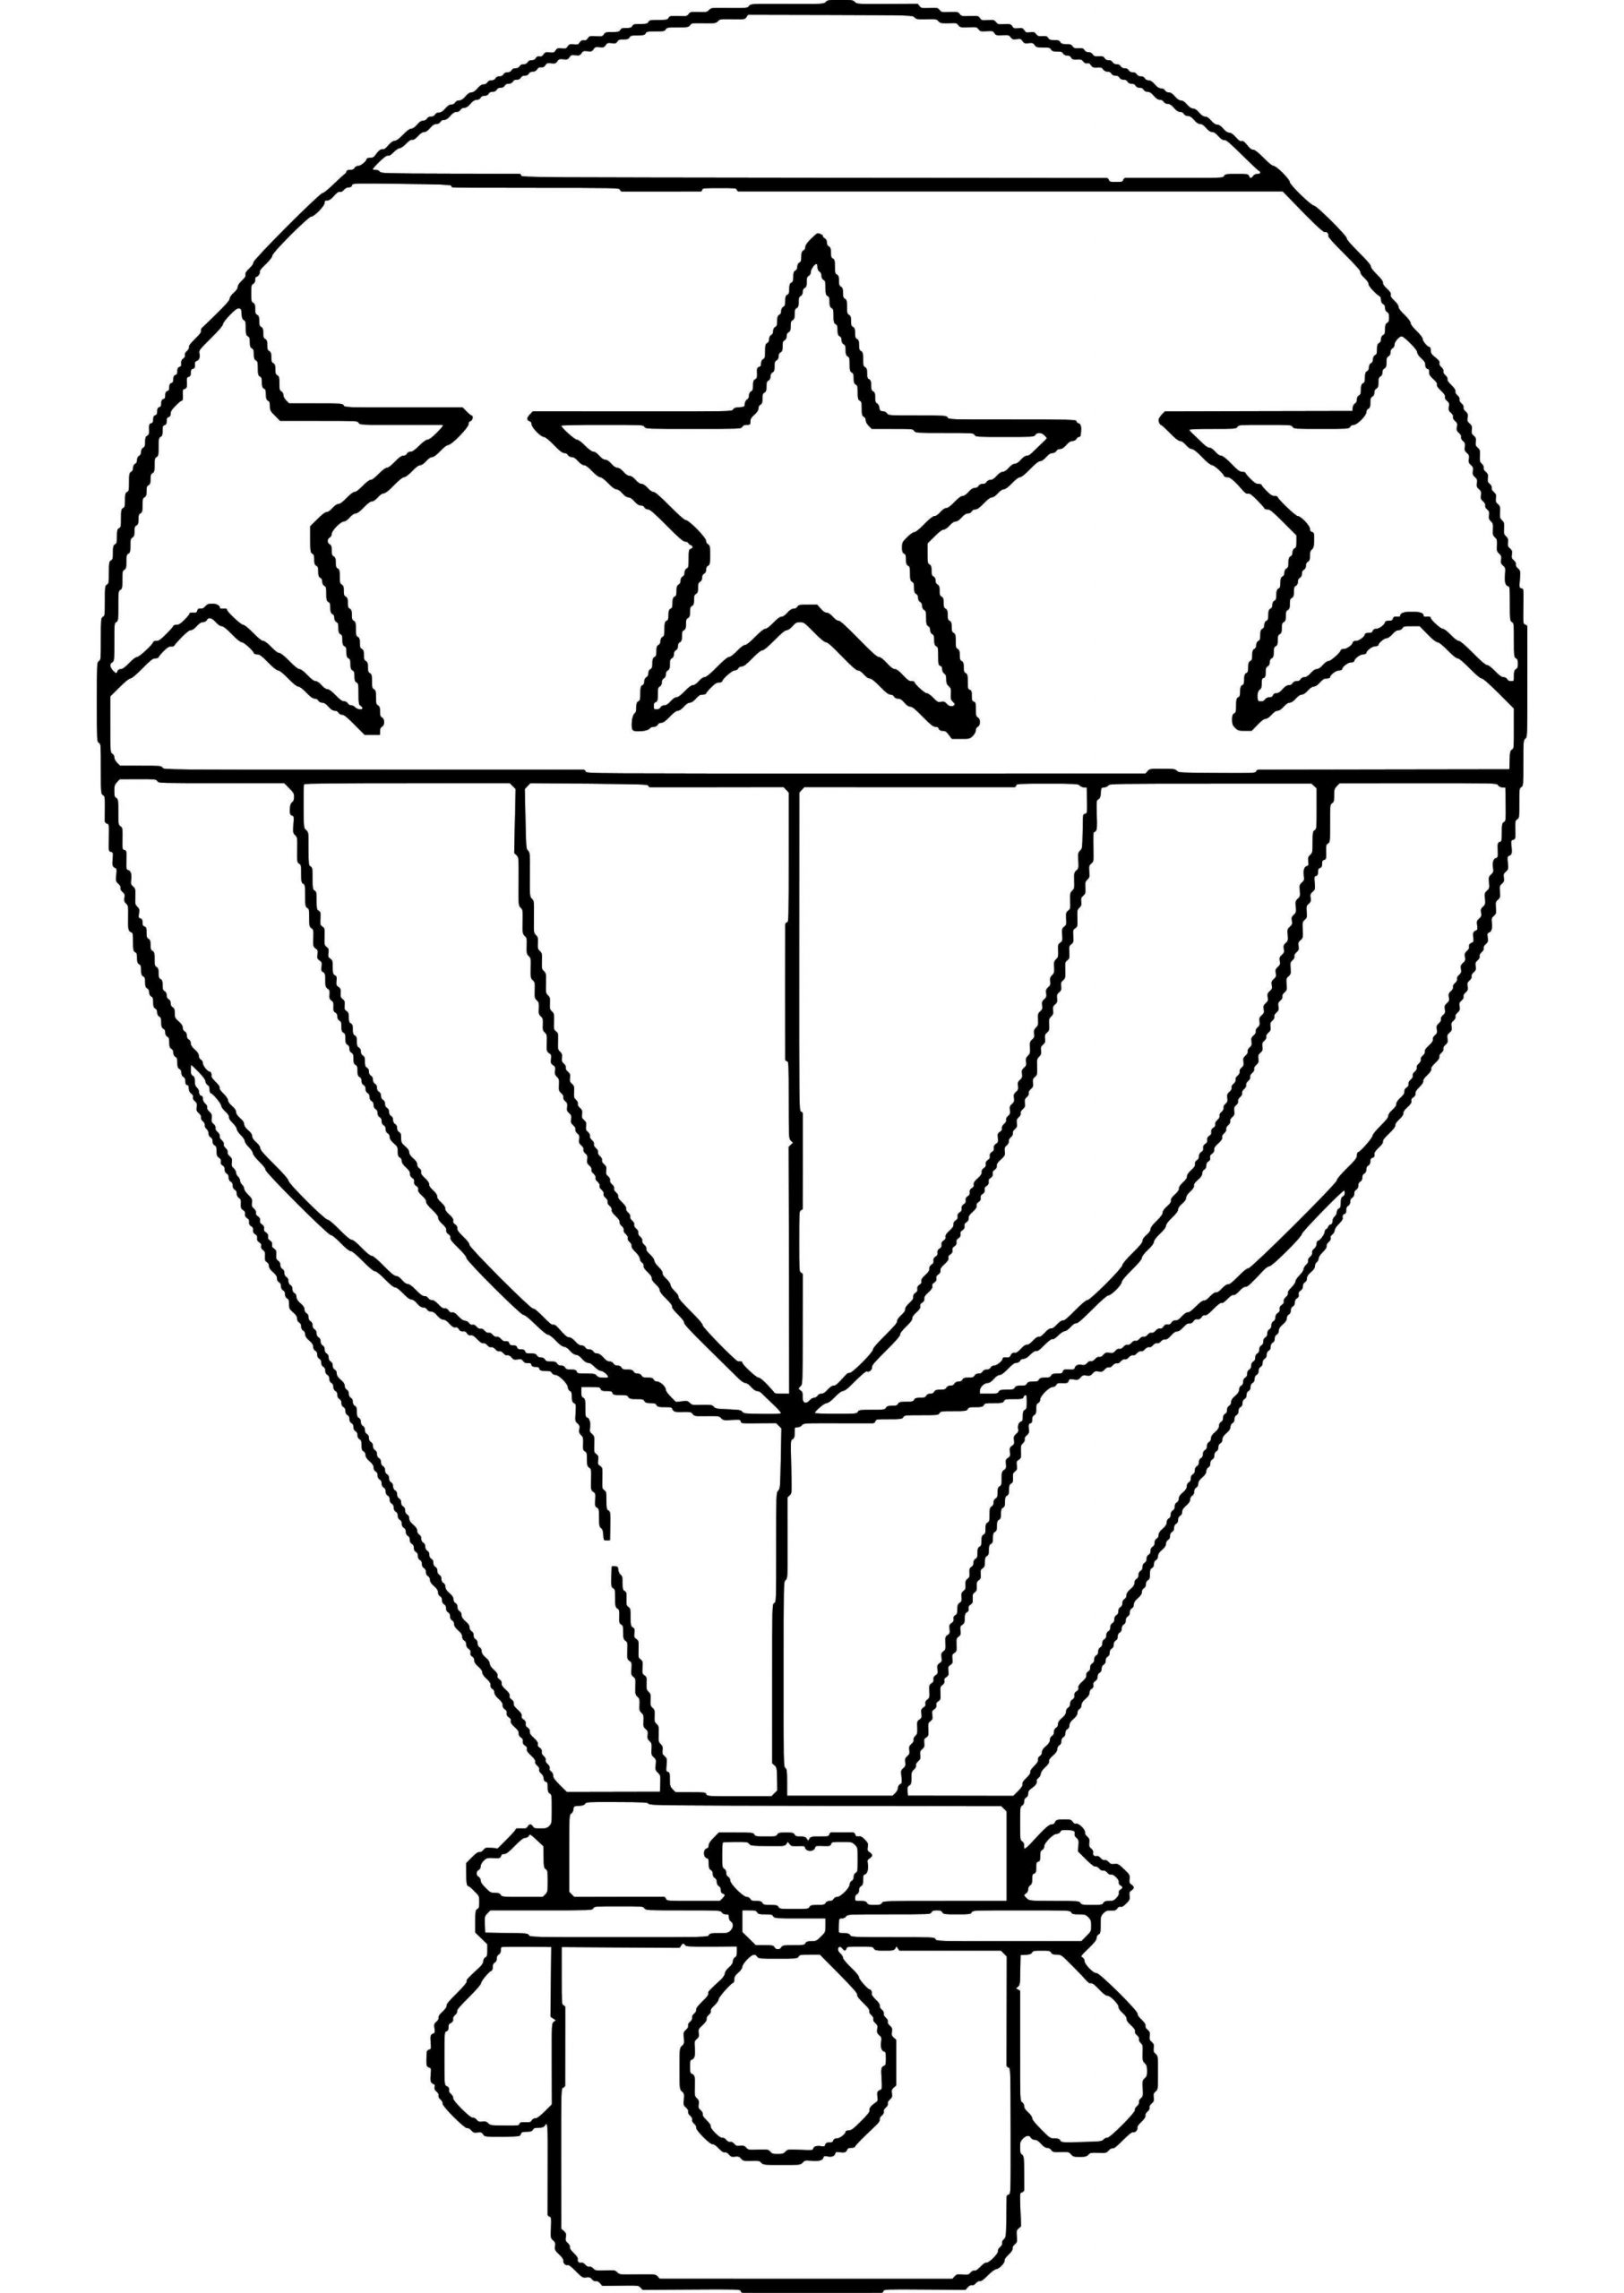 Gambar Sketsa Balon Udara